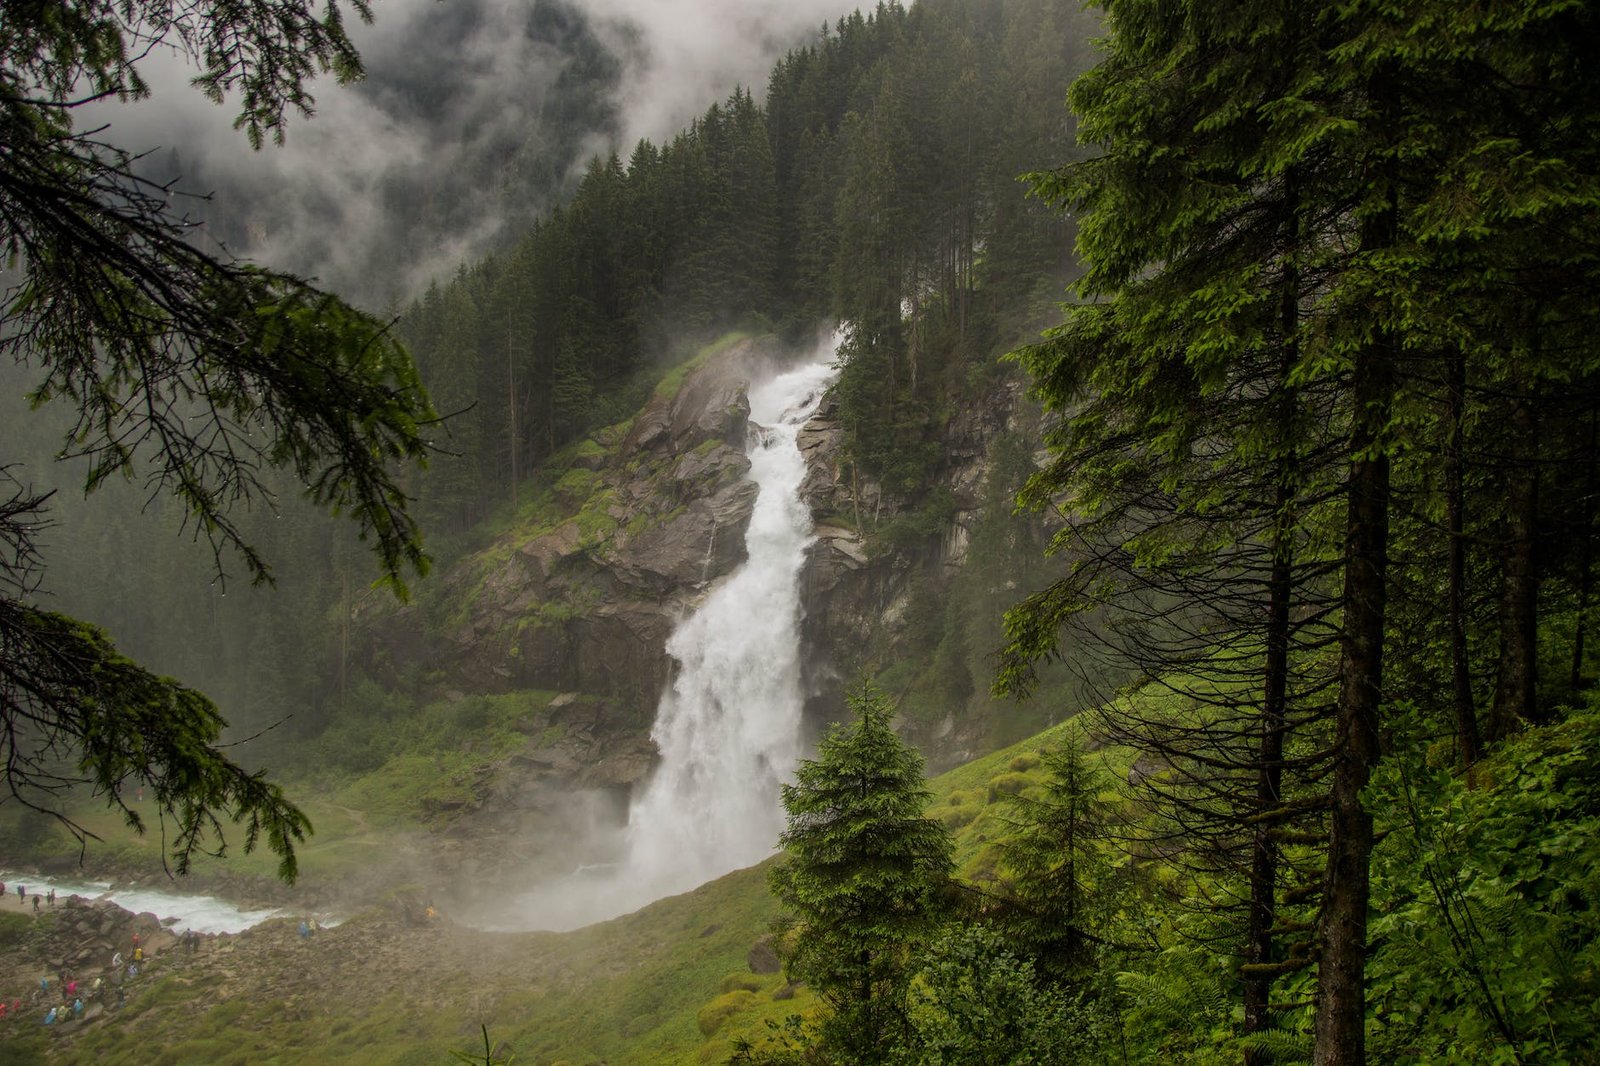 waterfall near trees - hiking in austria